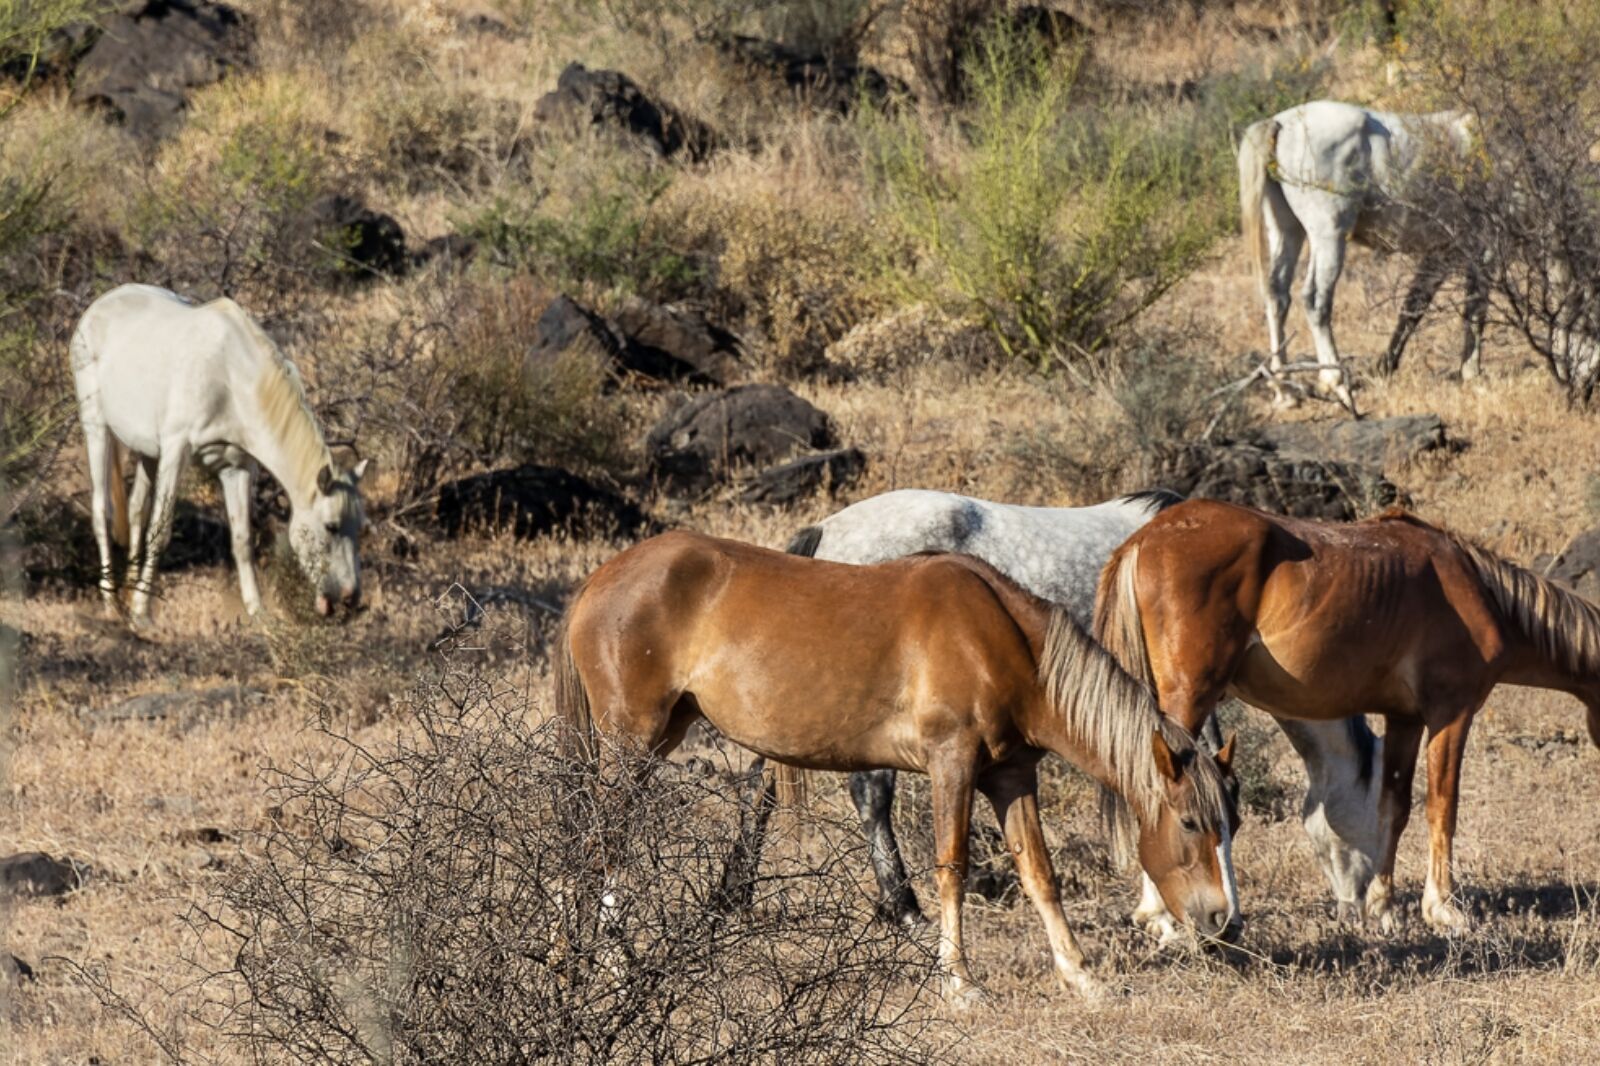 Group of wild horses in Arizona eating